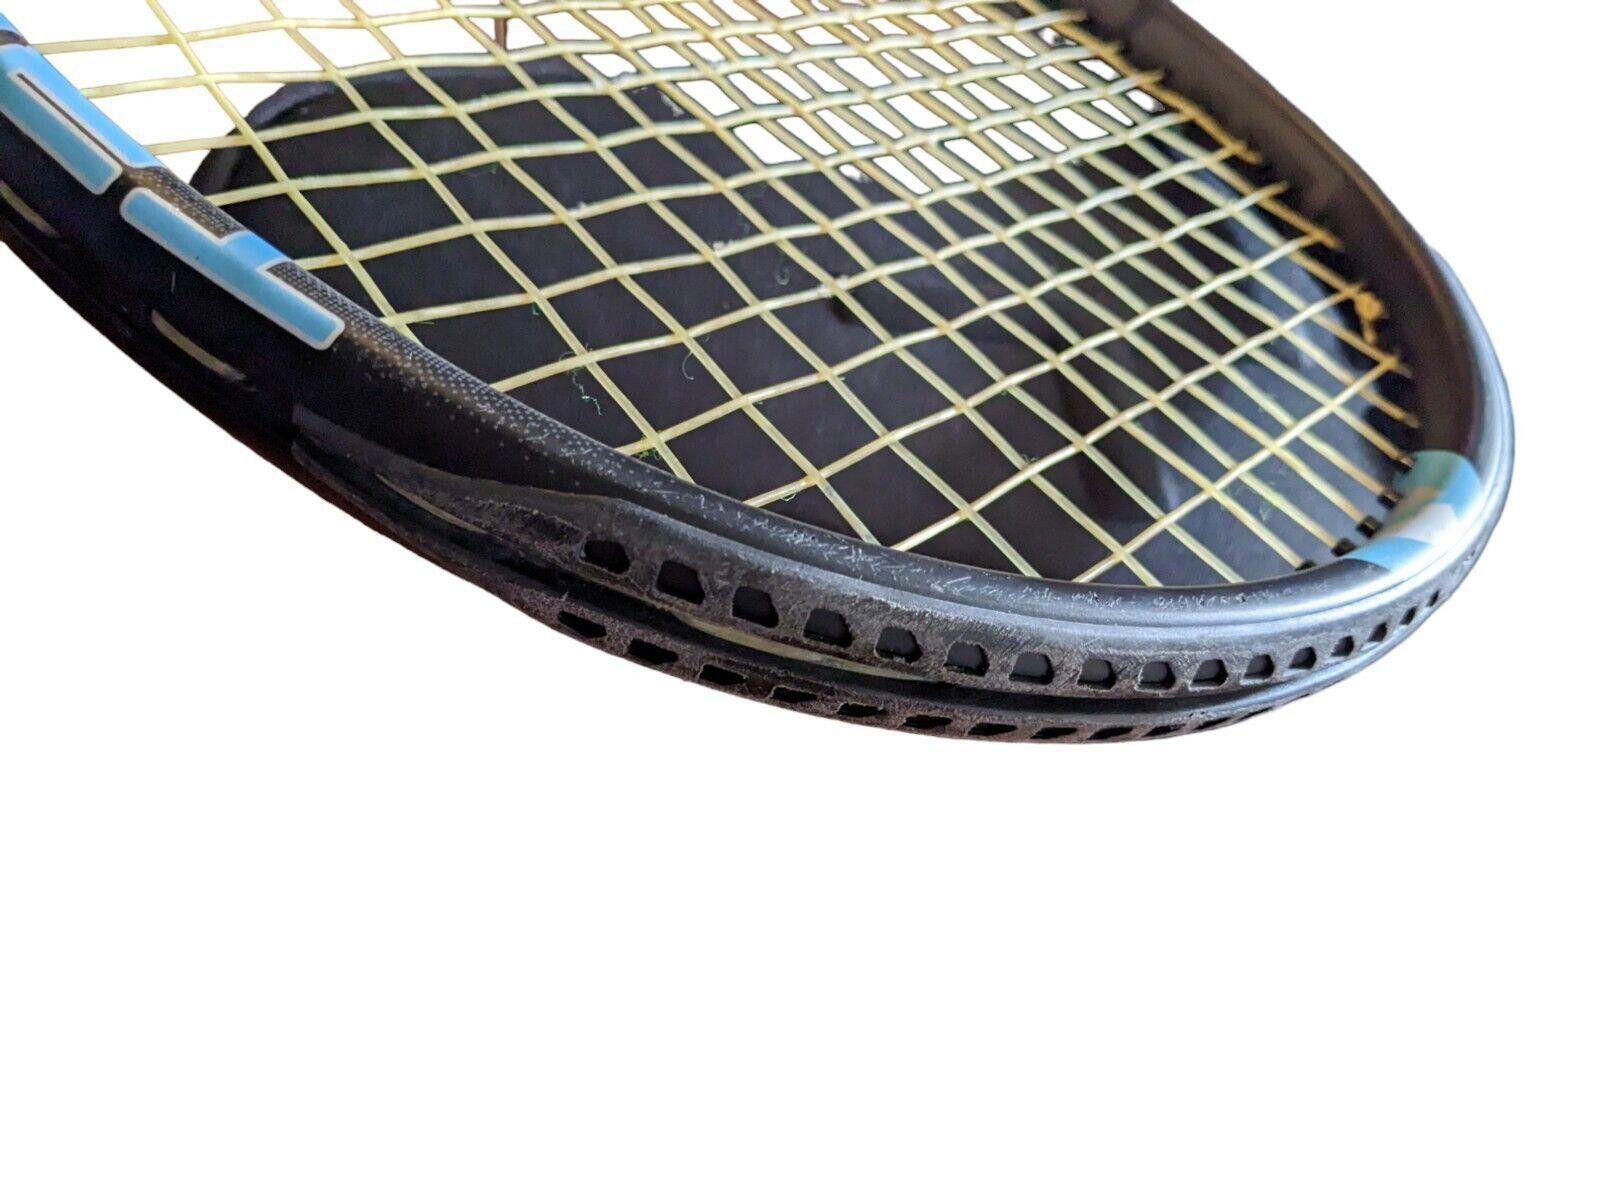 Wilson Triad 3.0 Hammer Tennis Racquet and Case #3 4 3/8 (Needs Grip & Strings) 9azLrz3DK